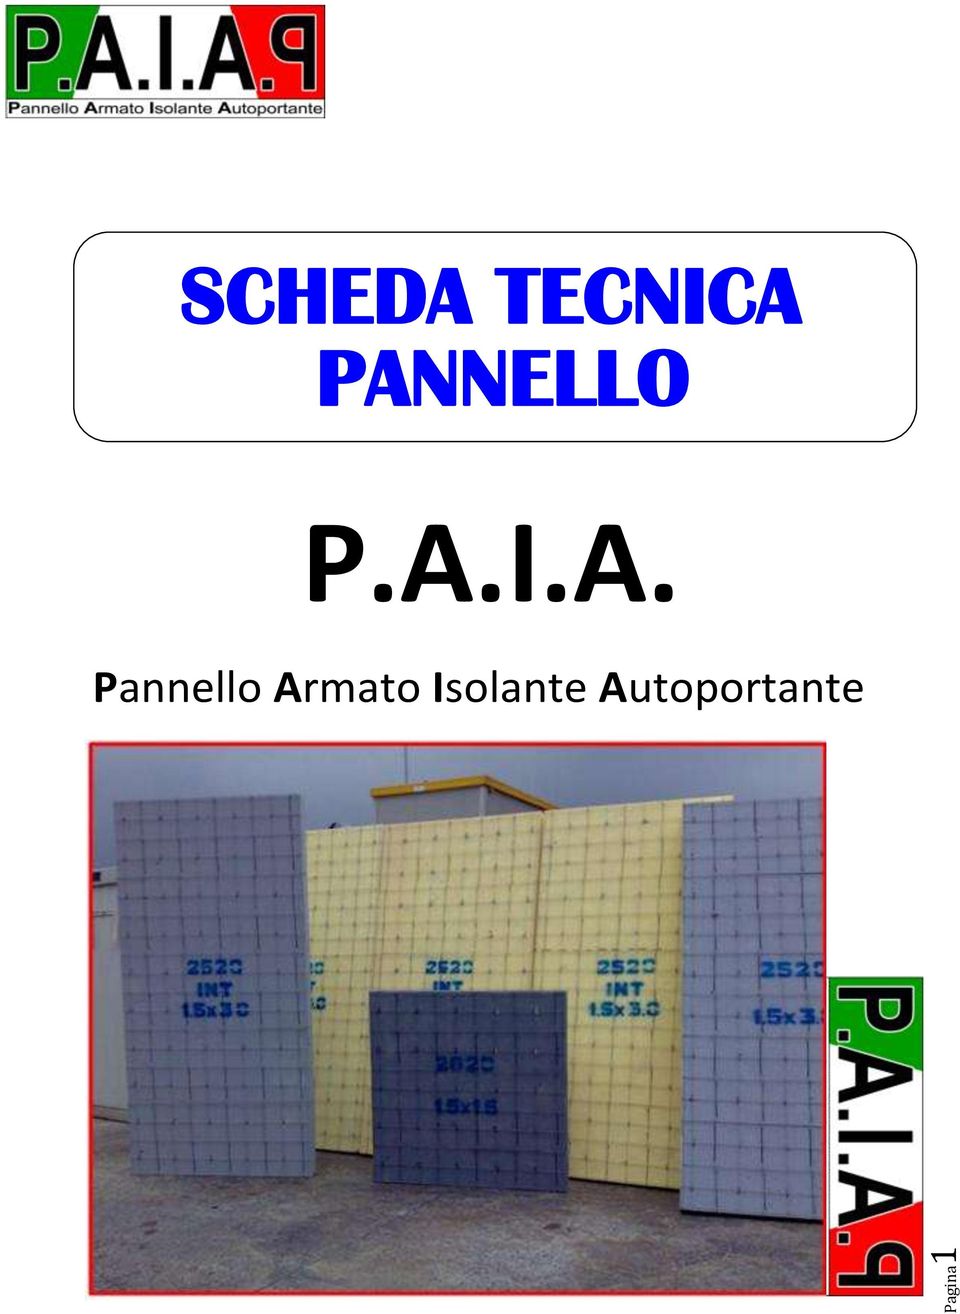 A.I.A. Pannello